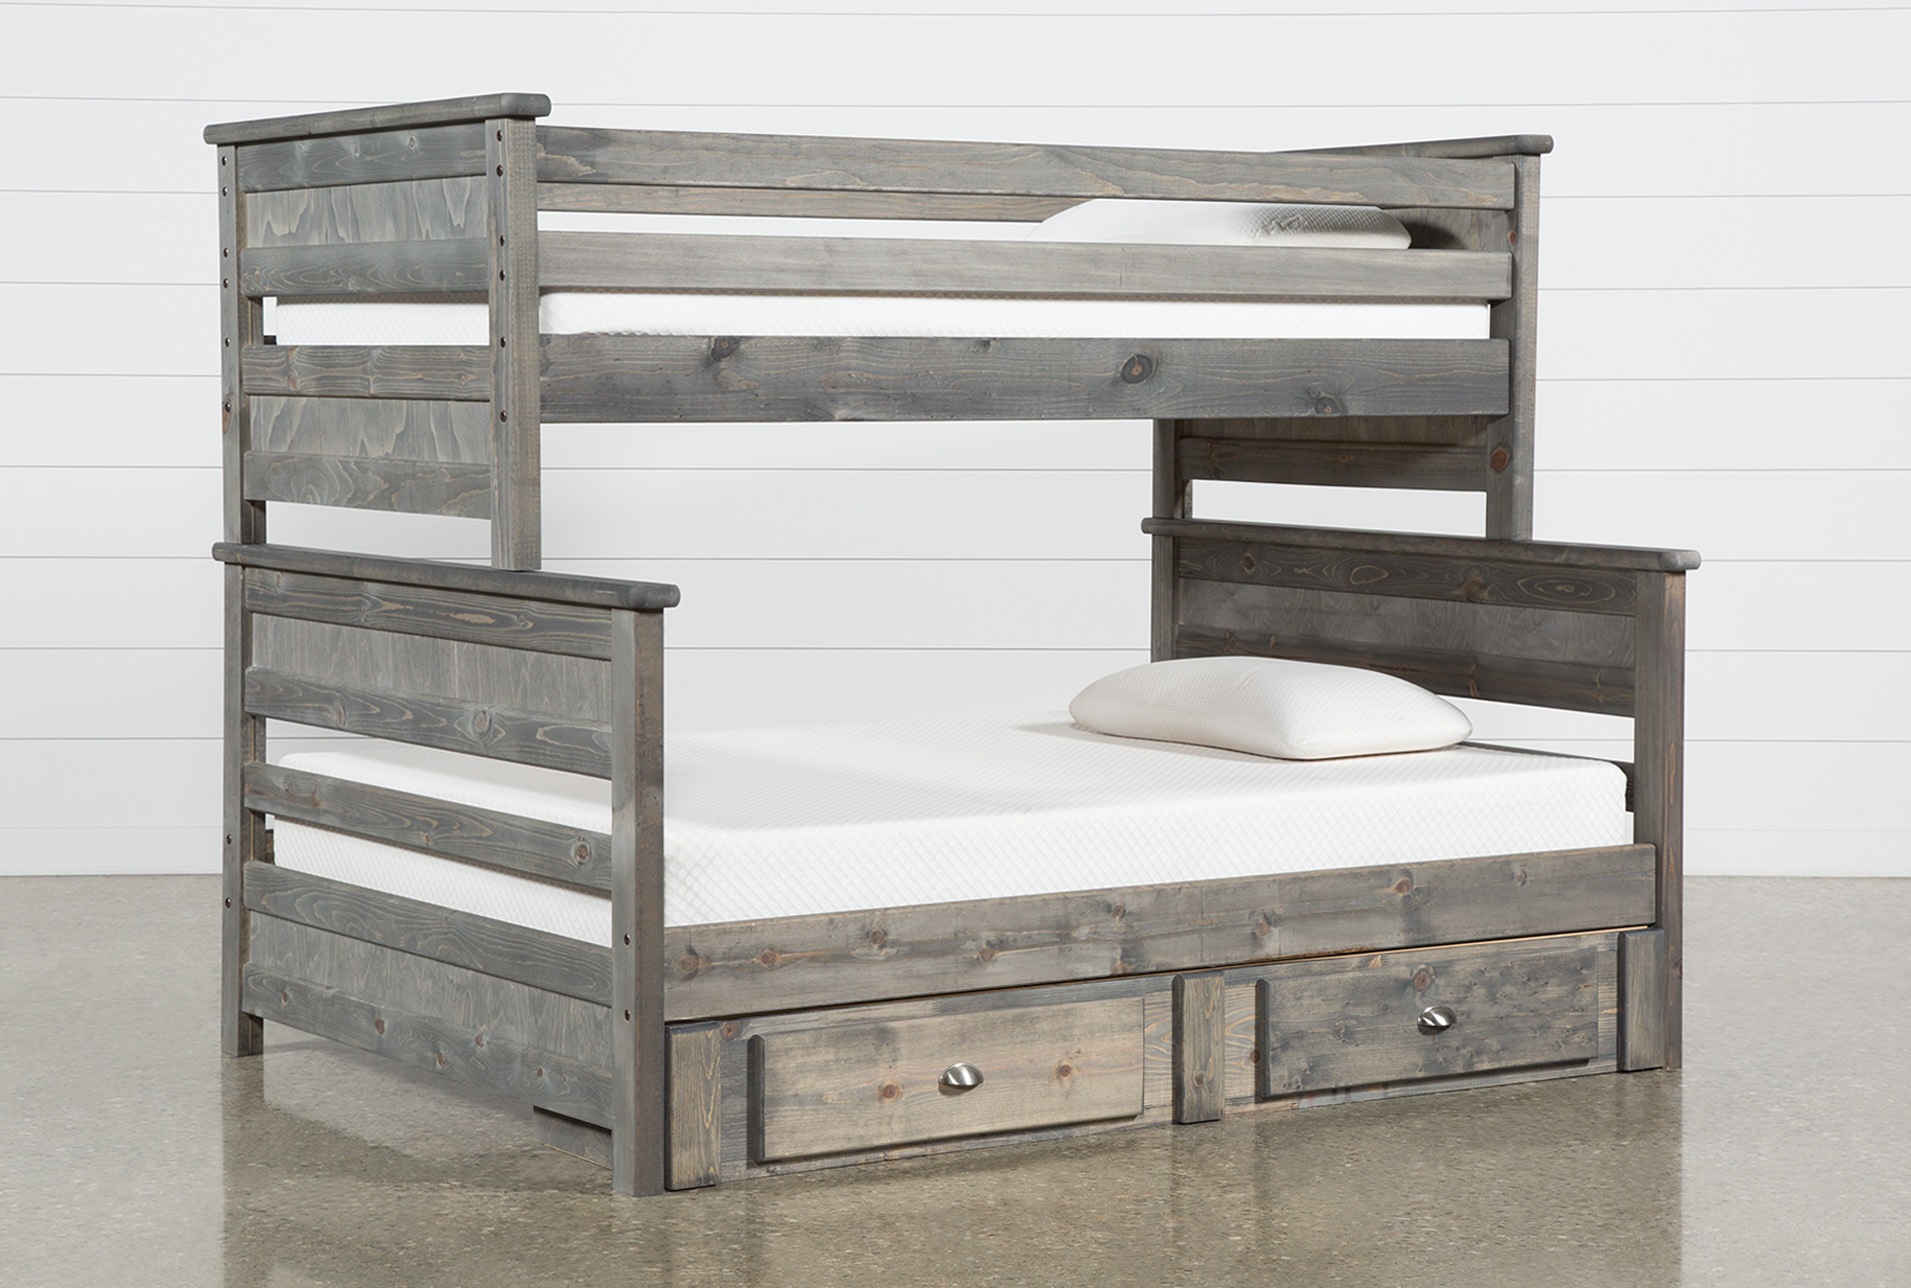 grey bunk beds with storage